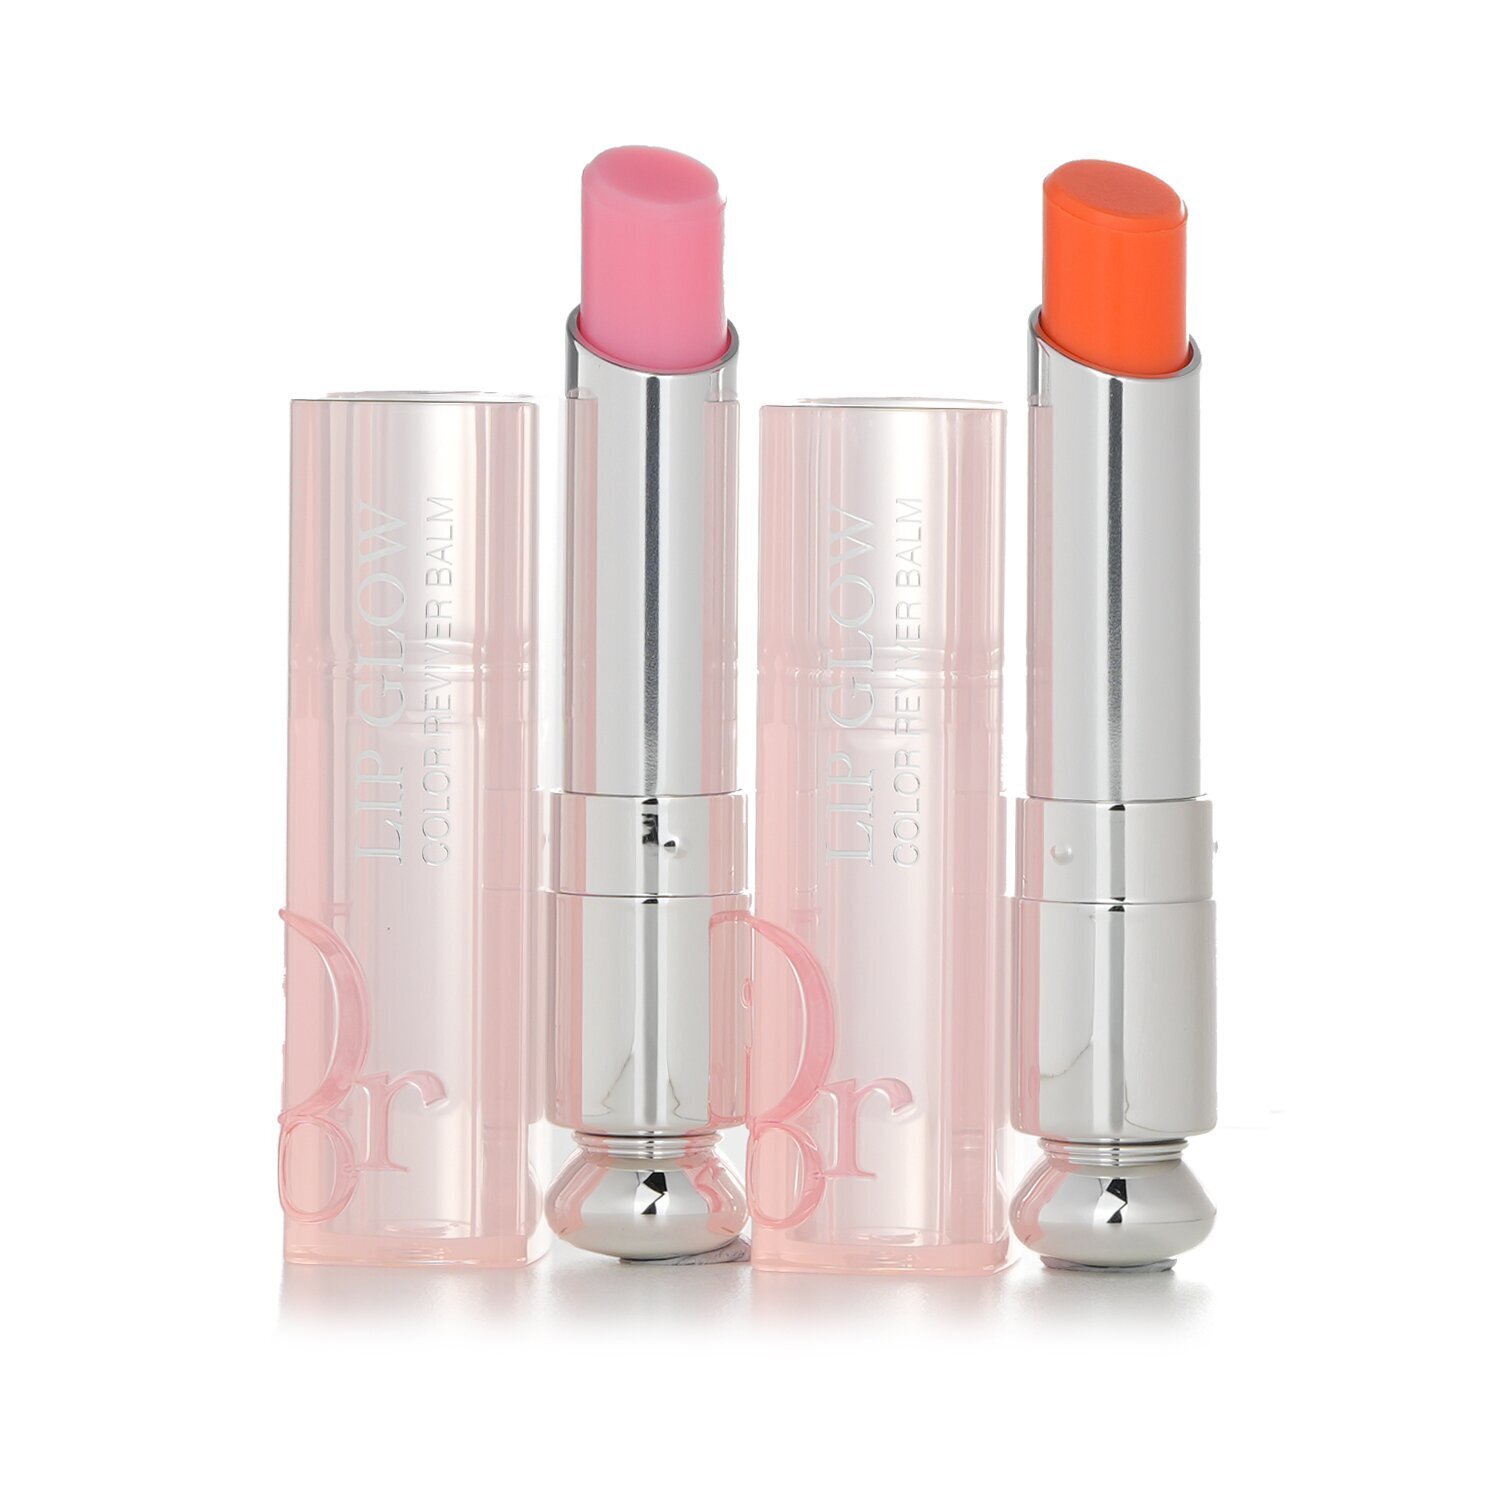 Christian Dior Addict Lip Glow Duo Set 2pcs